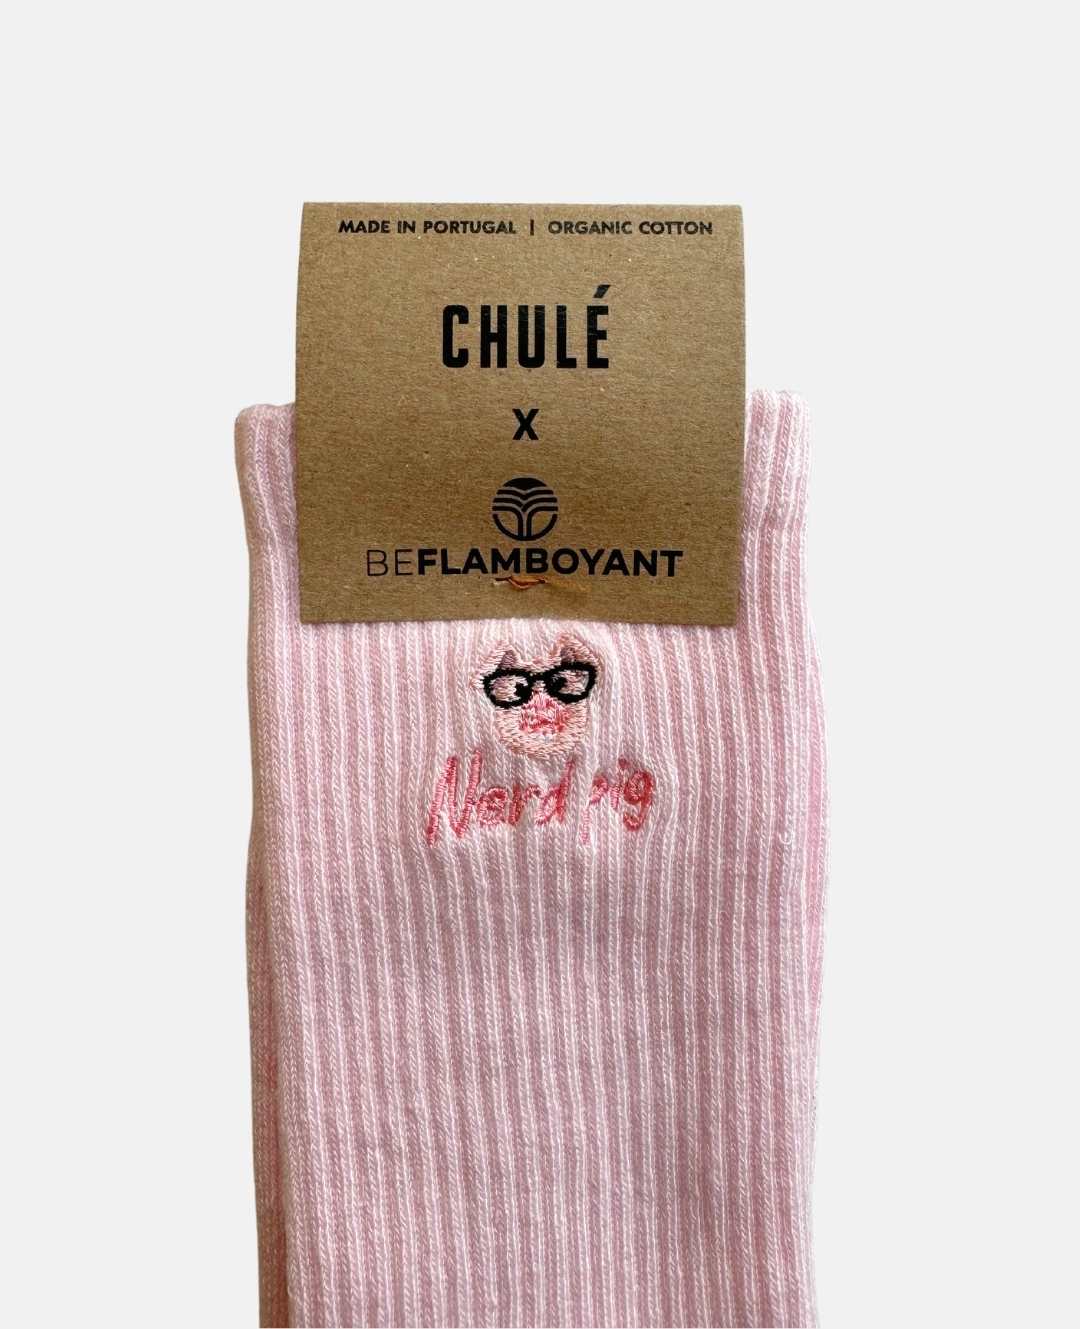 nerd-pig-organic-cotton-socks-close-view-with-label